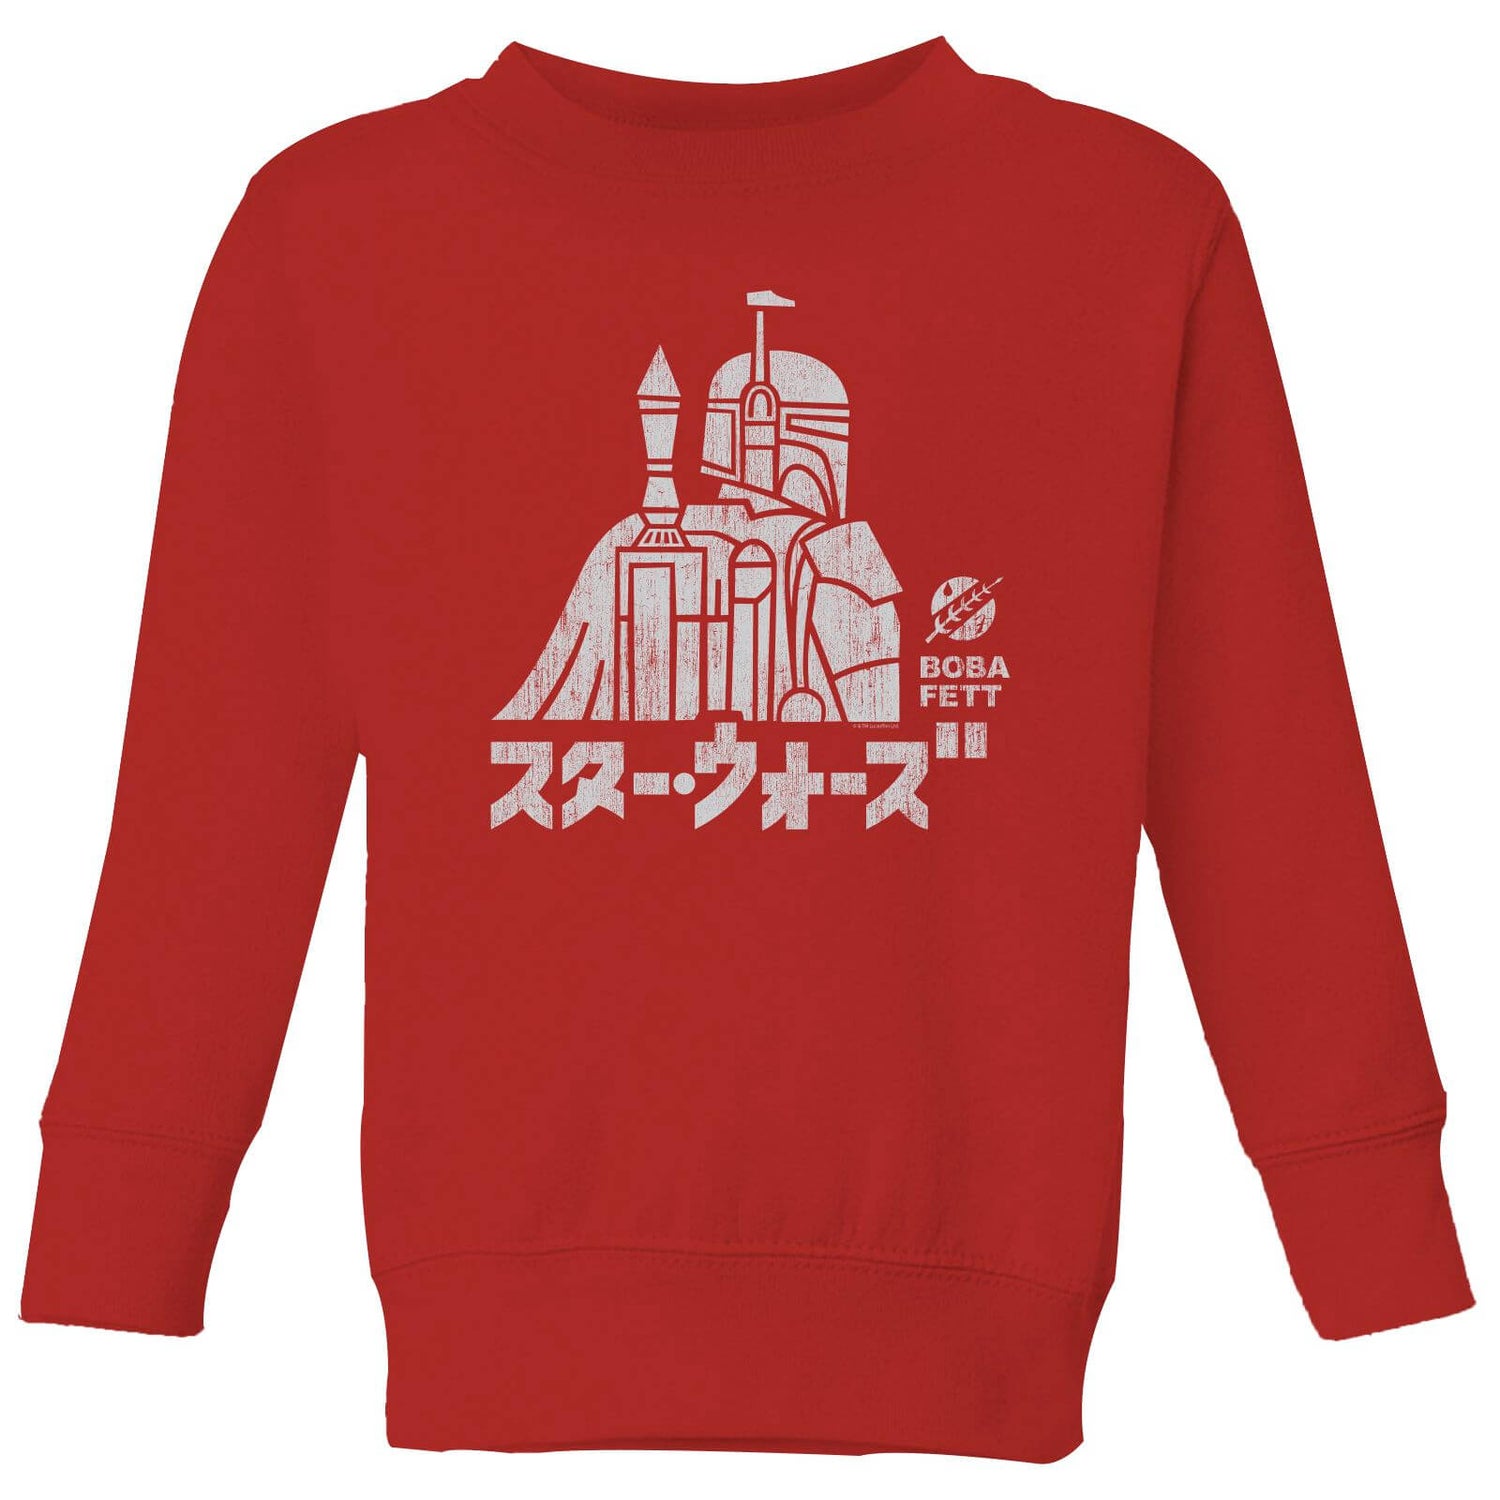 Star Wars Kana Boba Fett Kids' Sweatshirt - Red